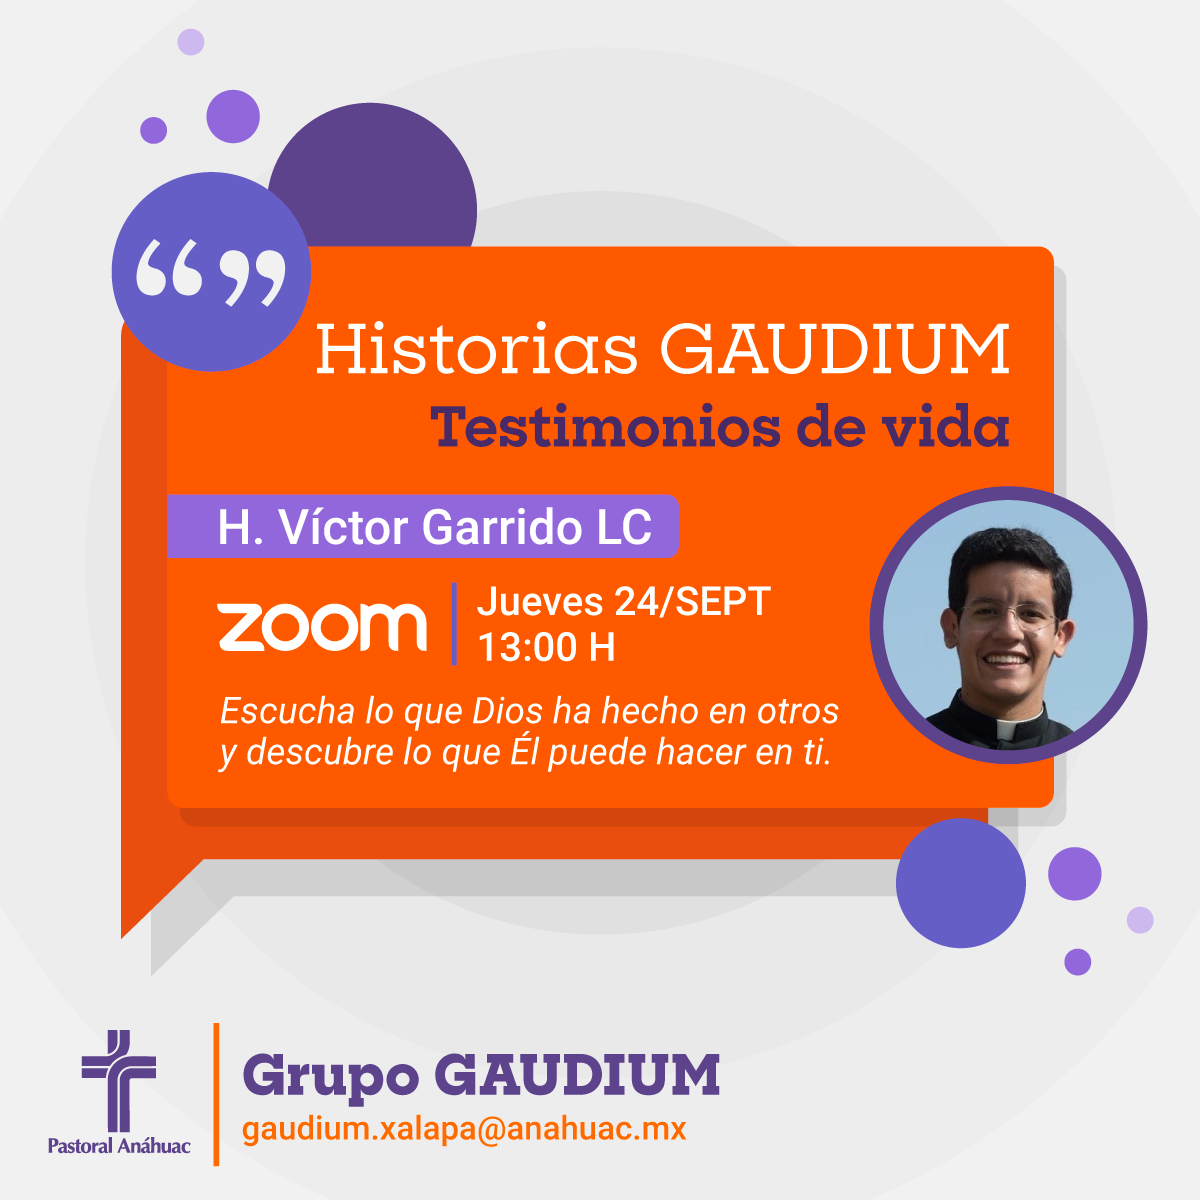 Historias Gaudium: H. Víctor Garrido LC